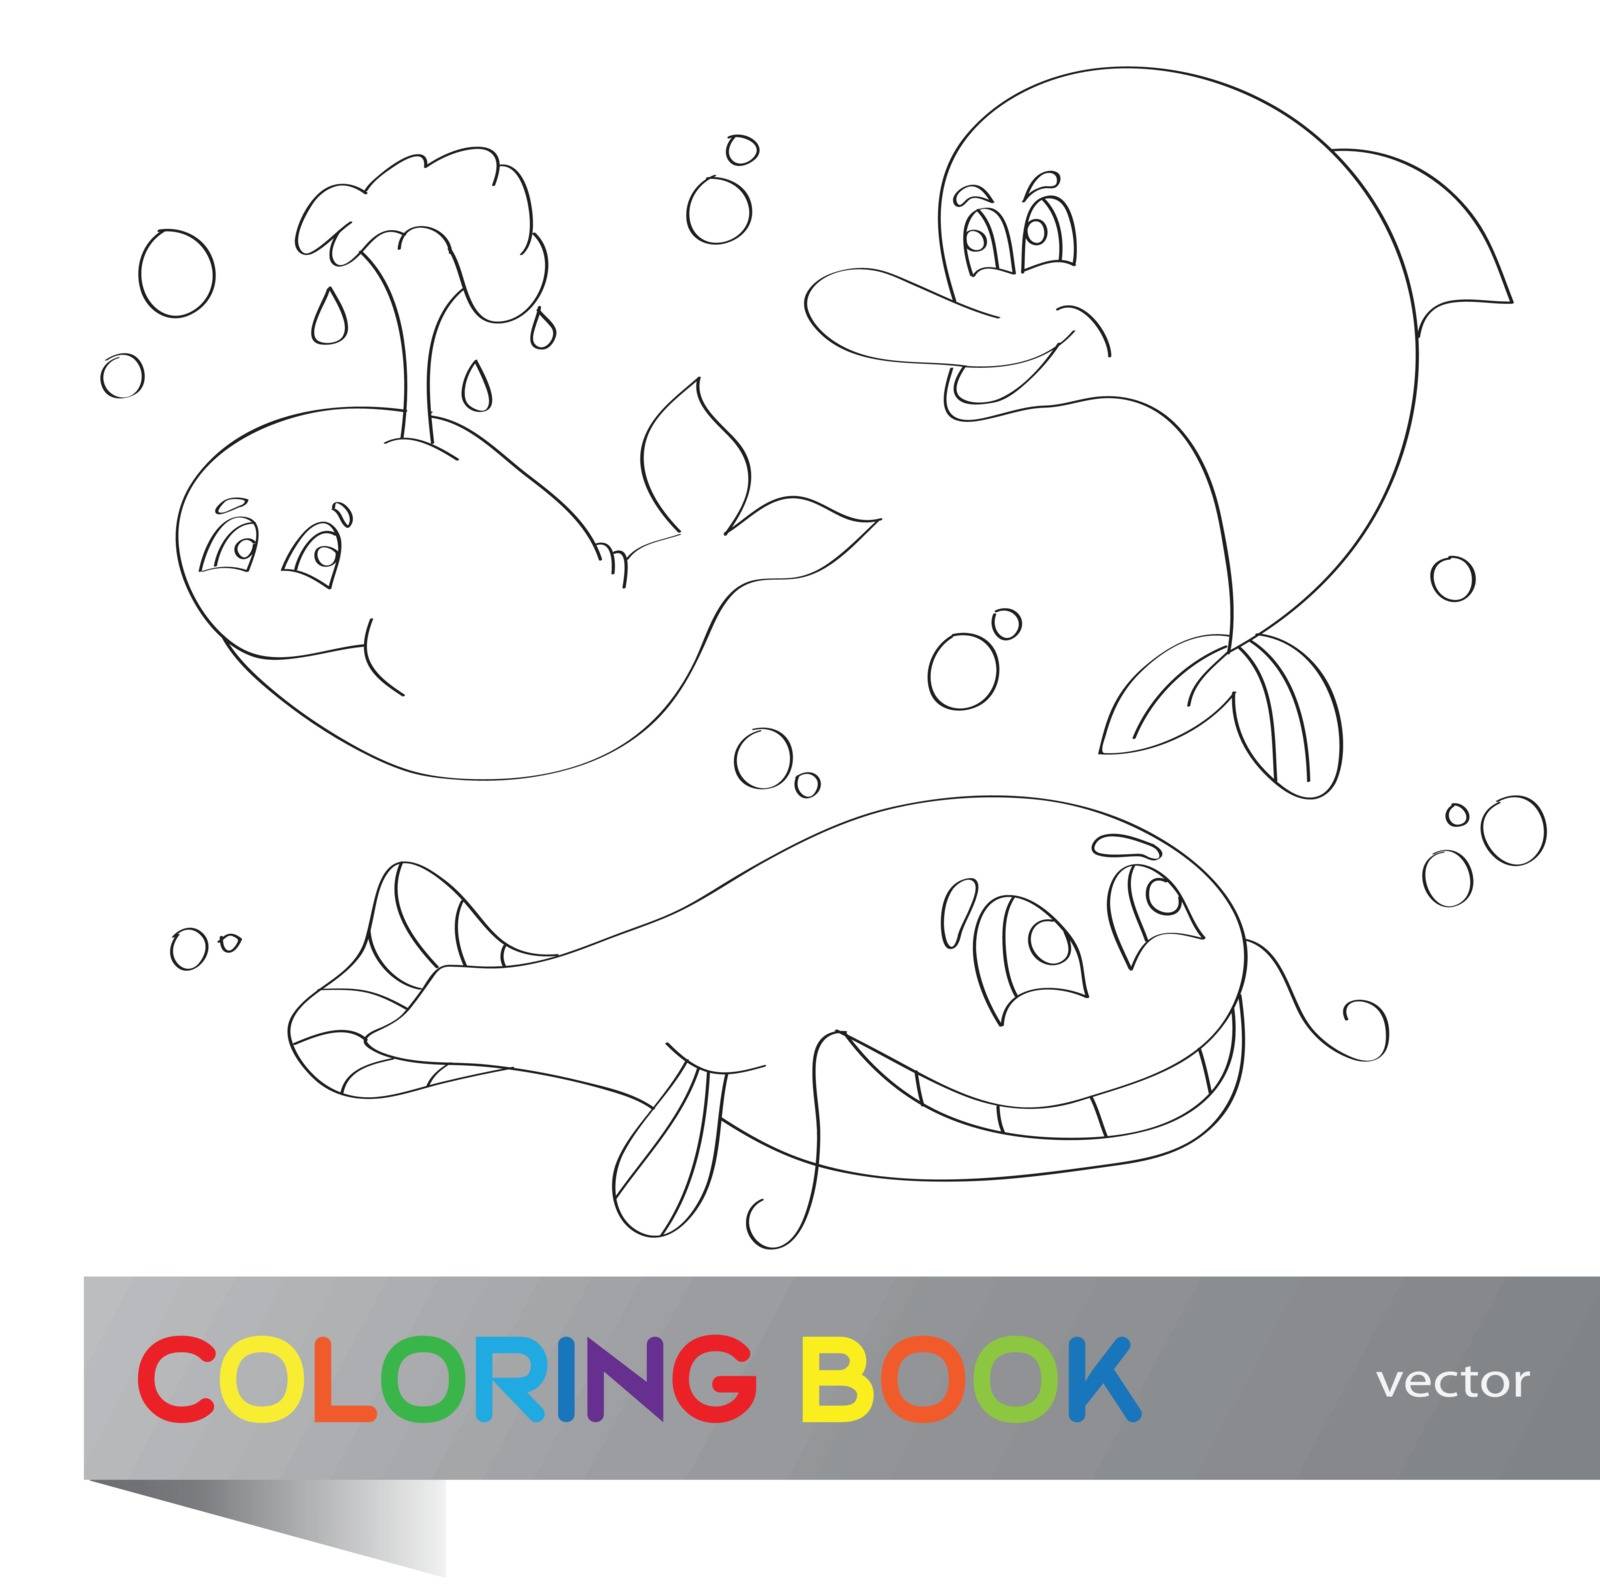 Coloring book - marine life by natali_brill